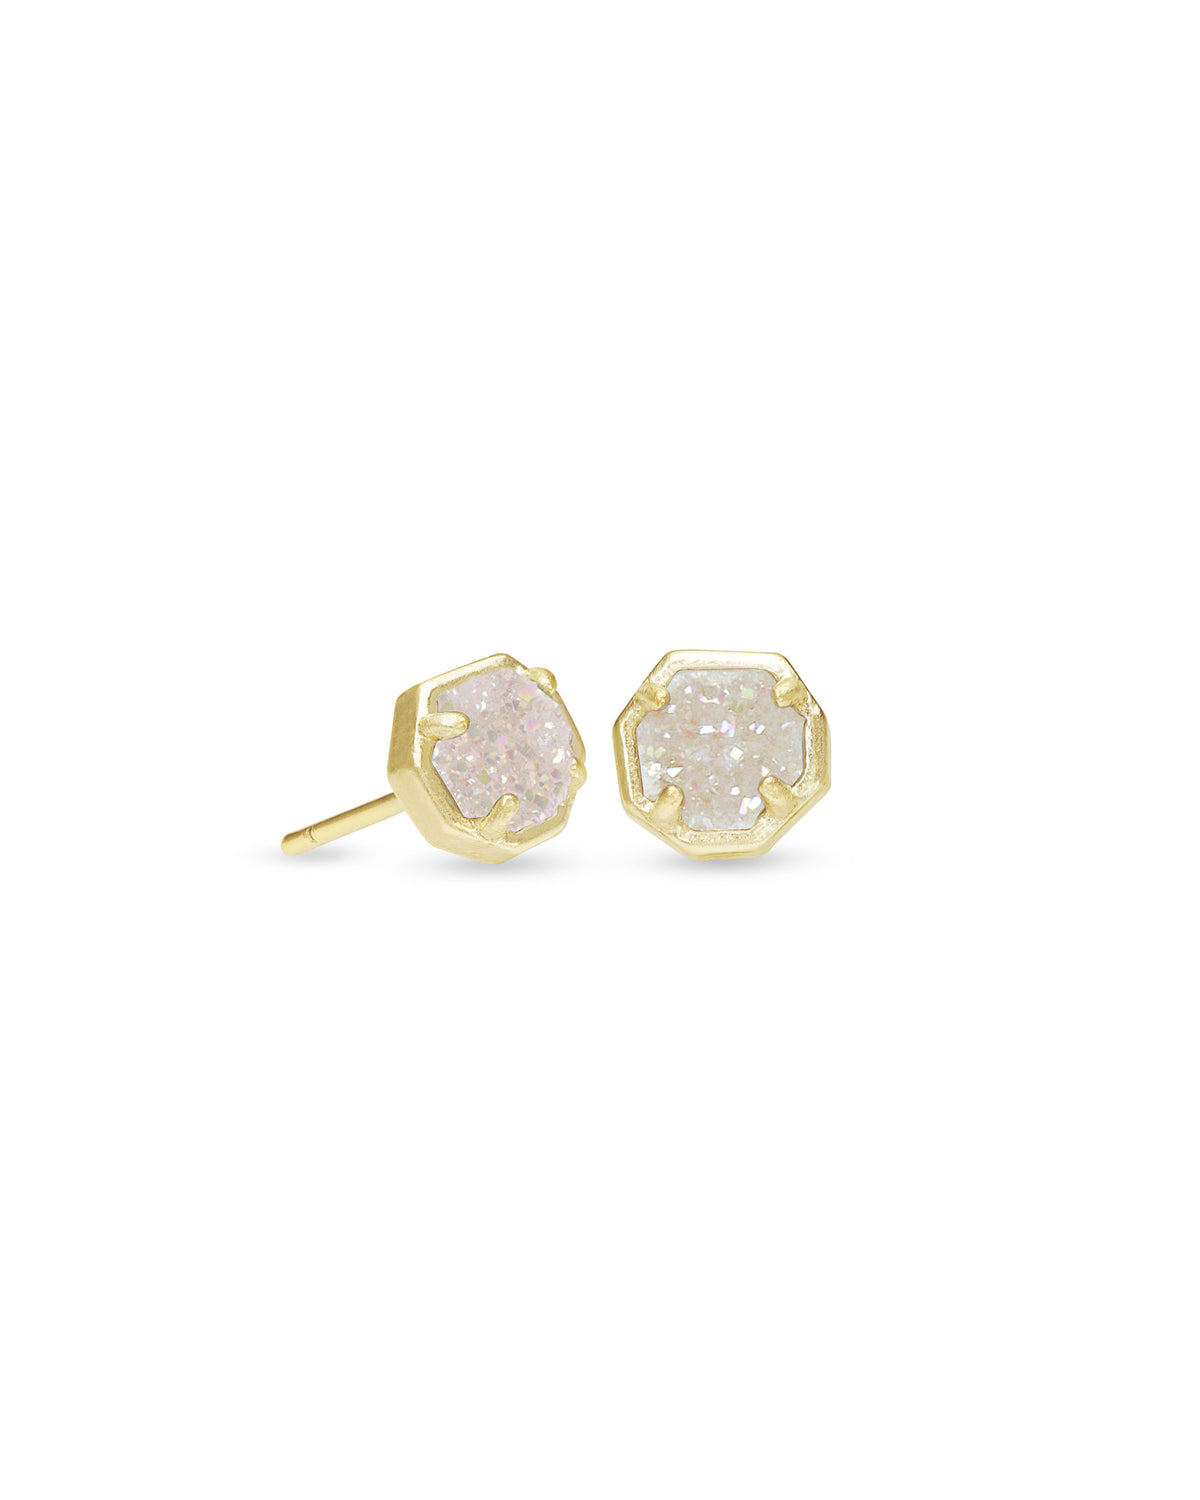 Kendra Scott Nola Gold Stud Earrings in Iridescent Drusy